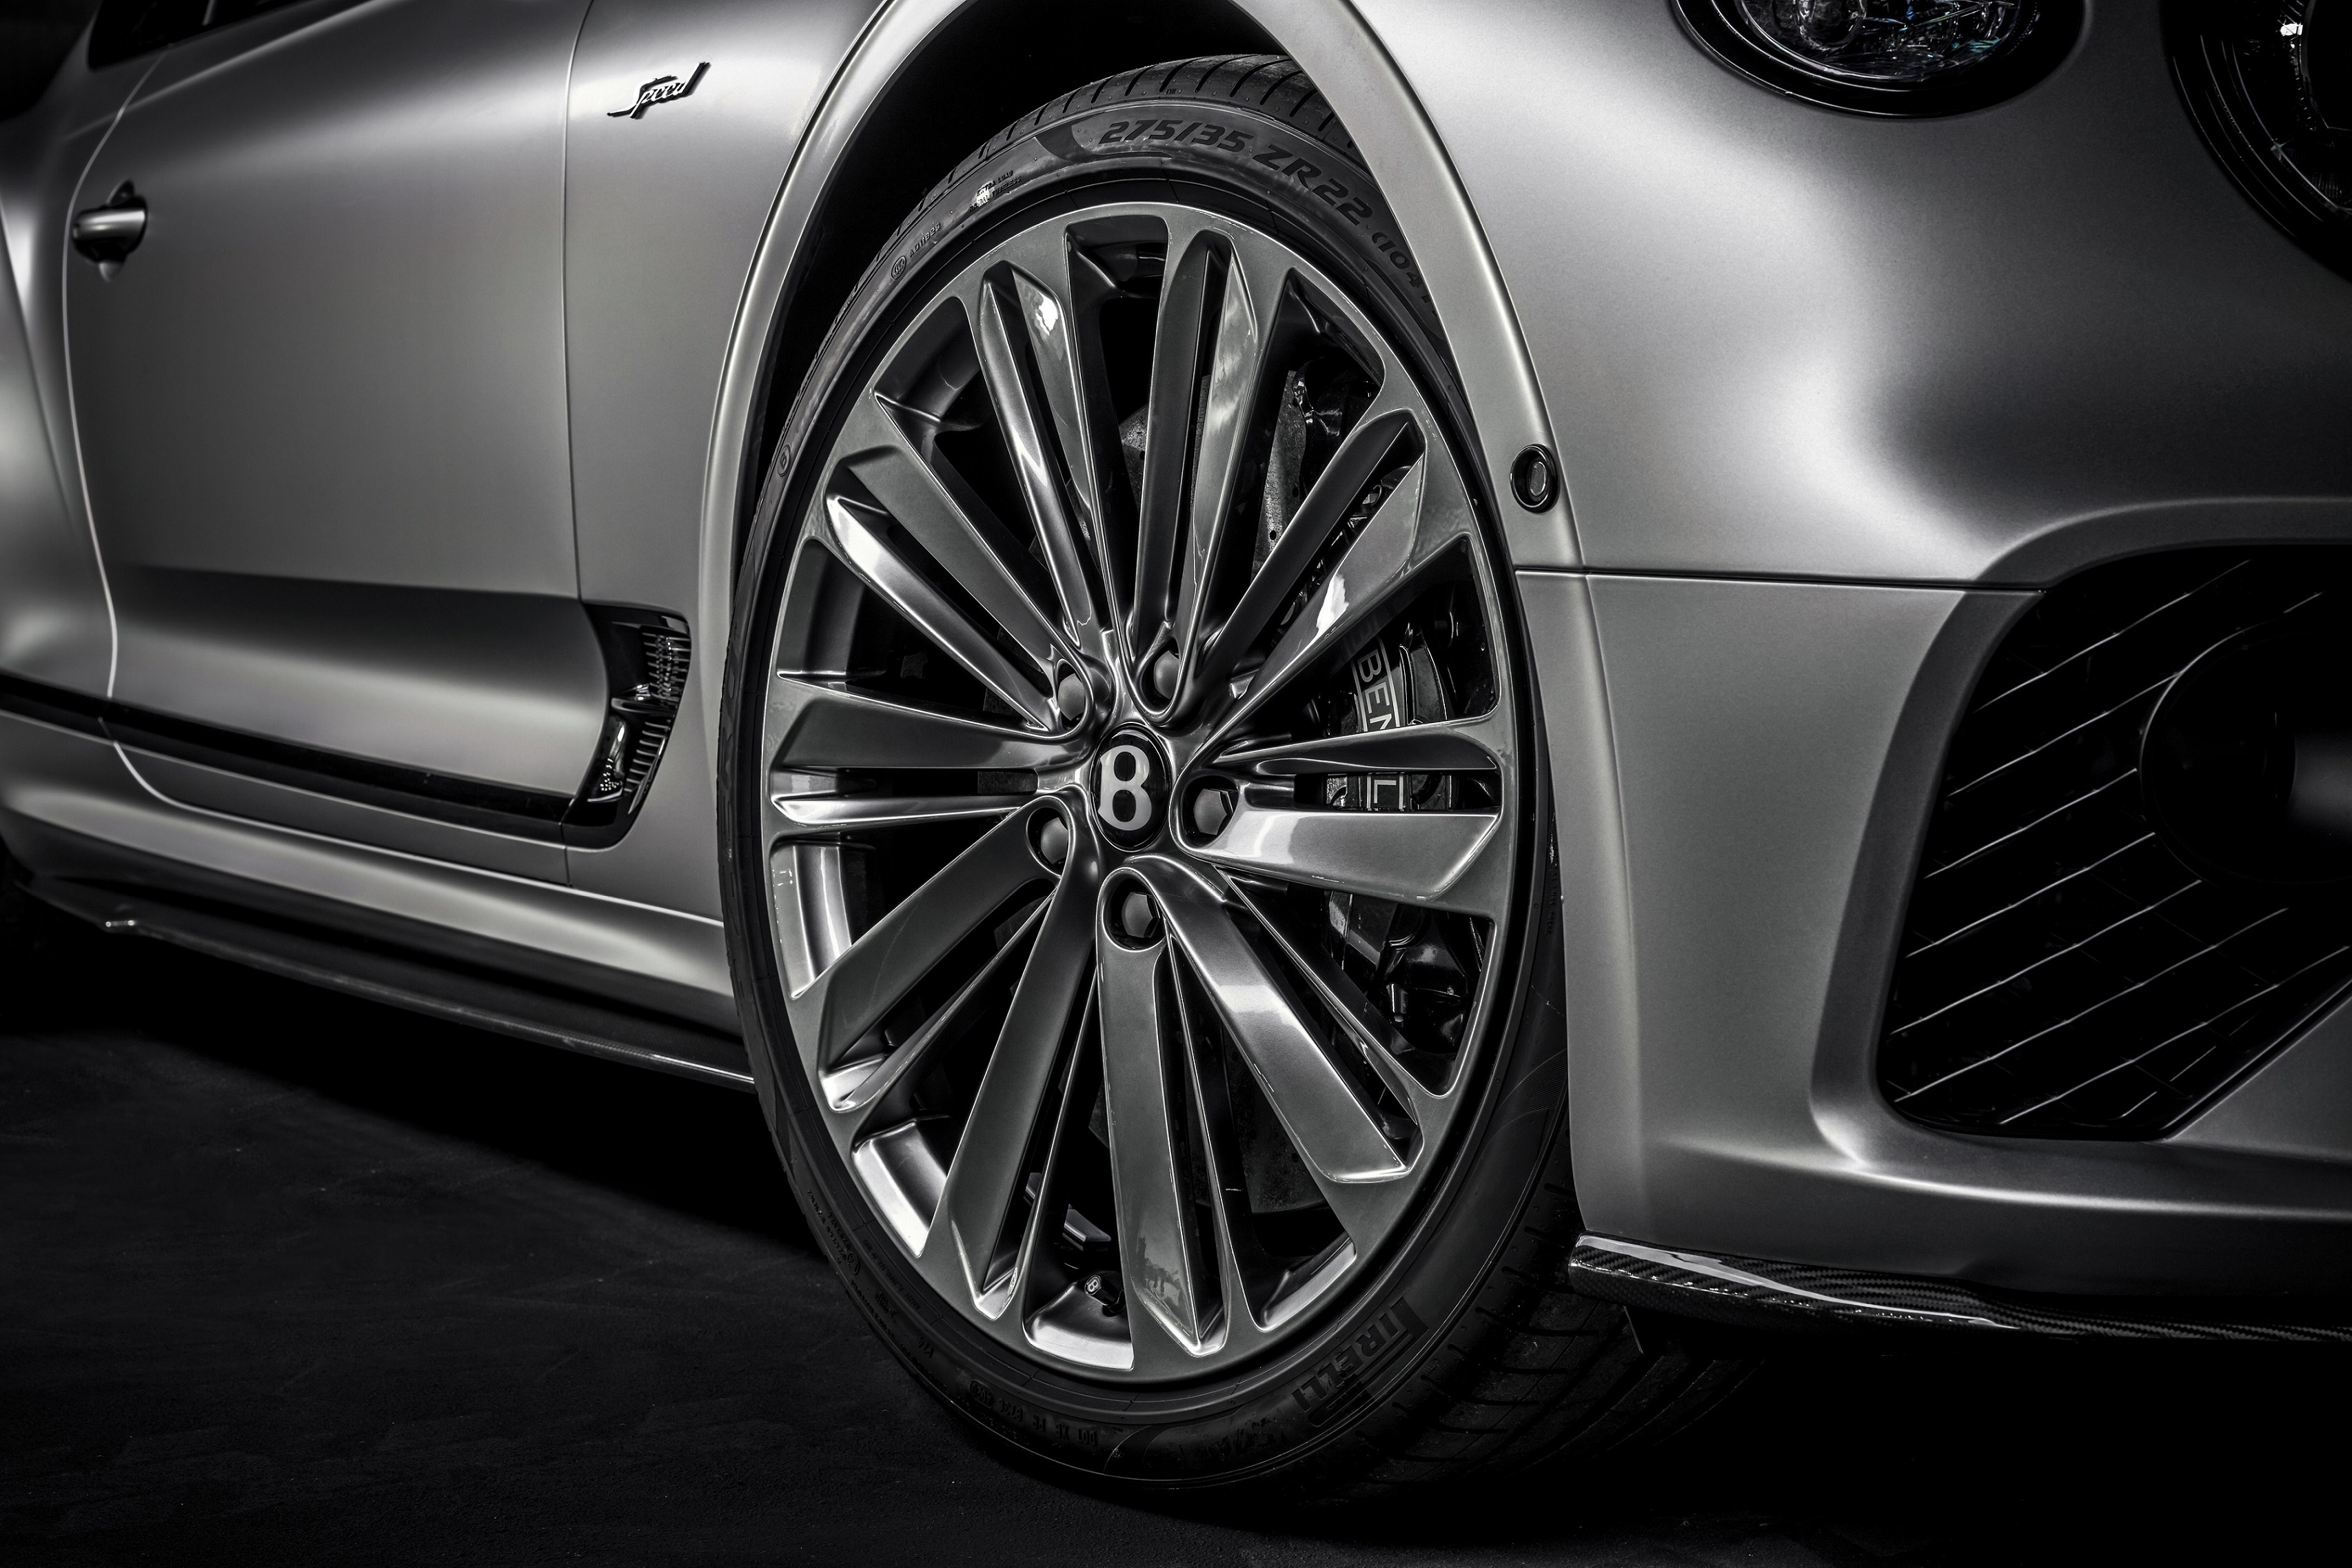 Continental GT Speed搭載著名Bentley動態駕駛系統、全輪驅動以及全輪轉向功能，得以匹配強大動力輸出。(圖片來源/ Bentley)